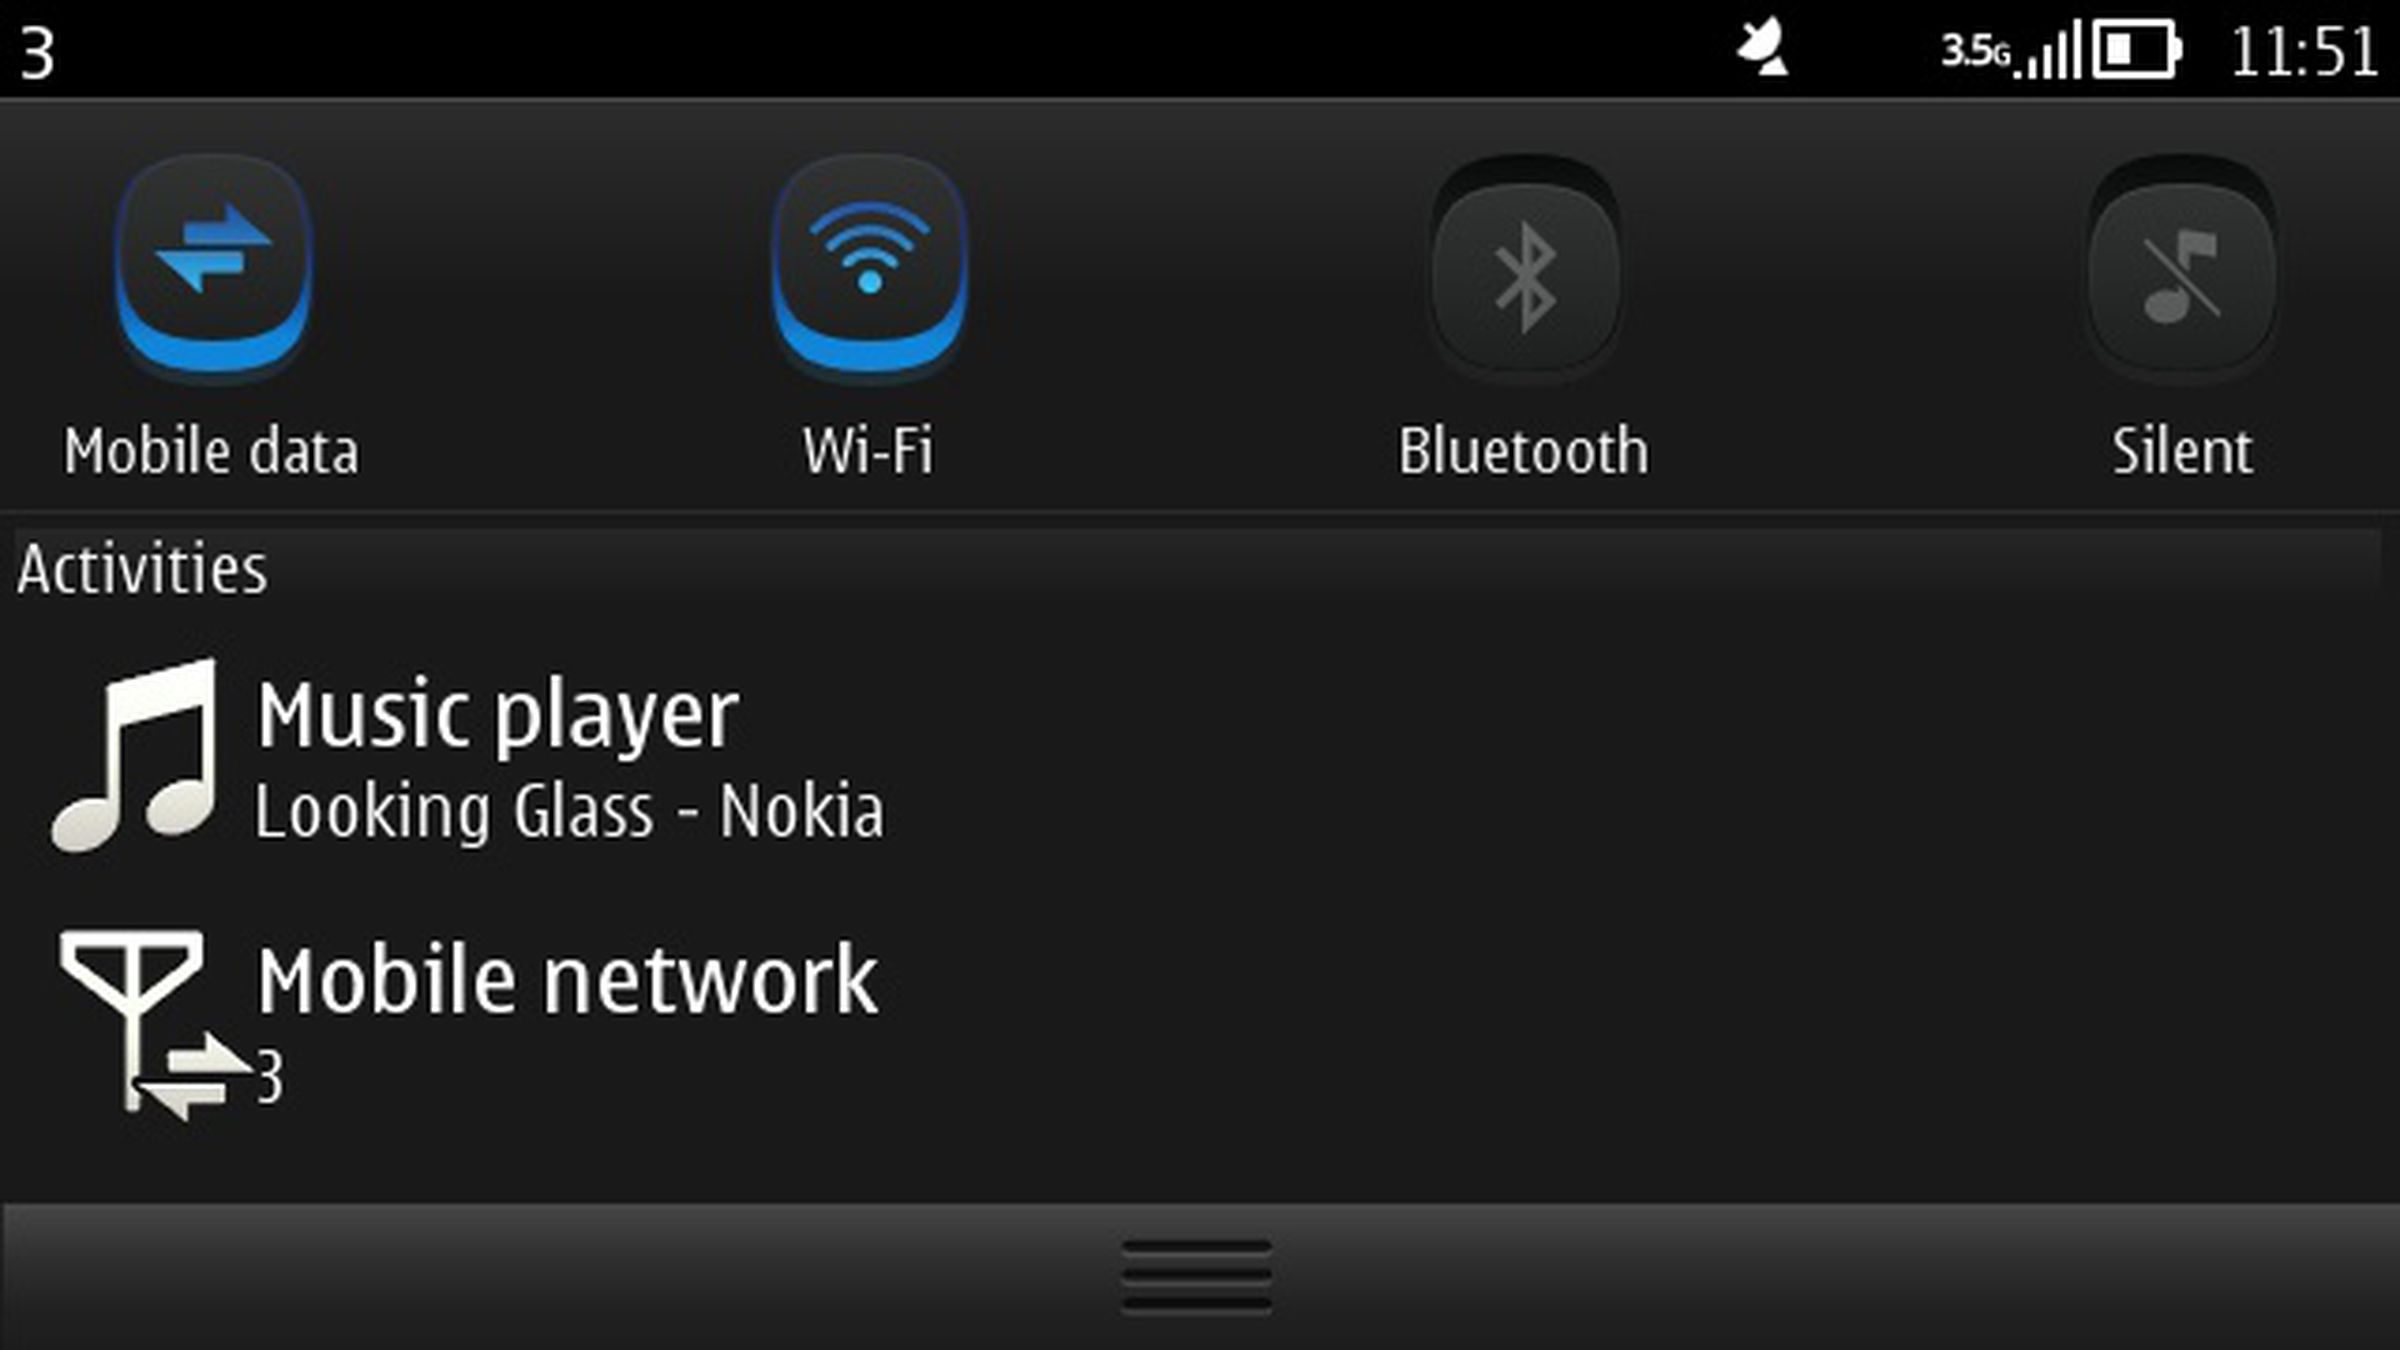 Nokia 808 PureView UI screenshots